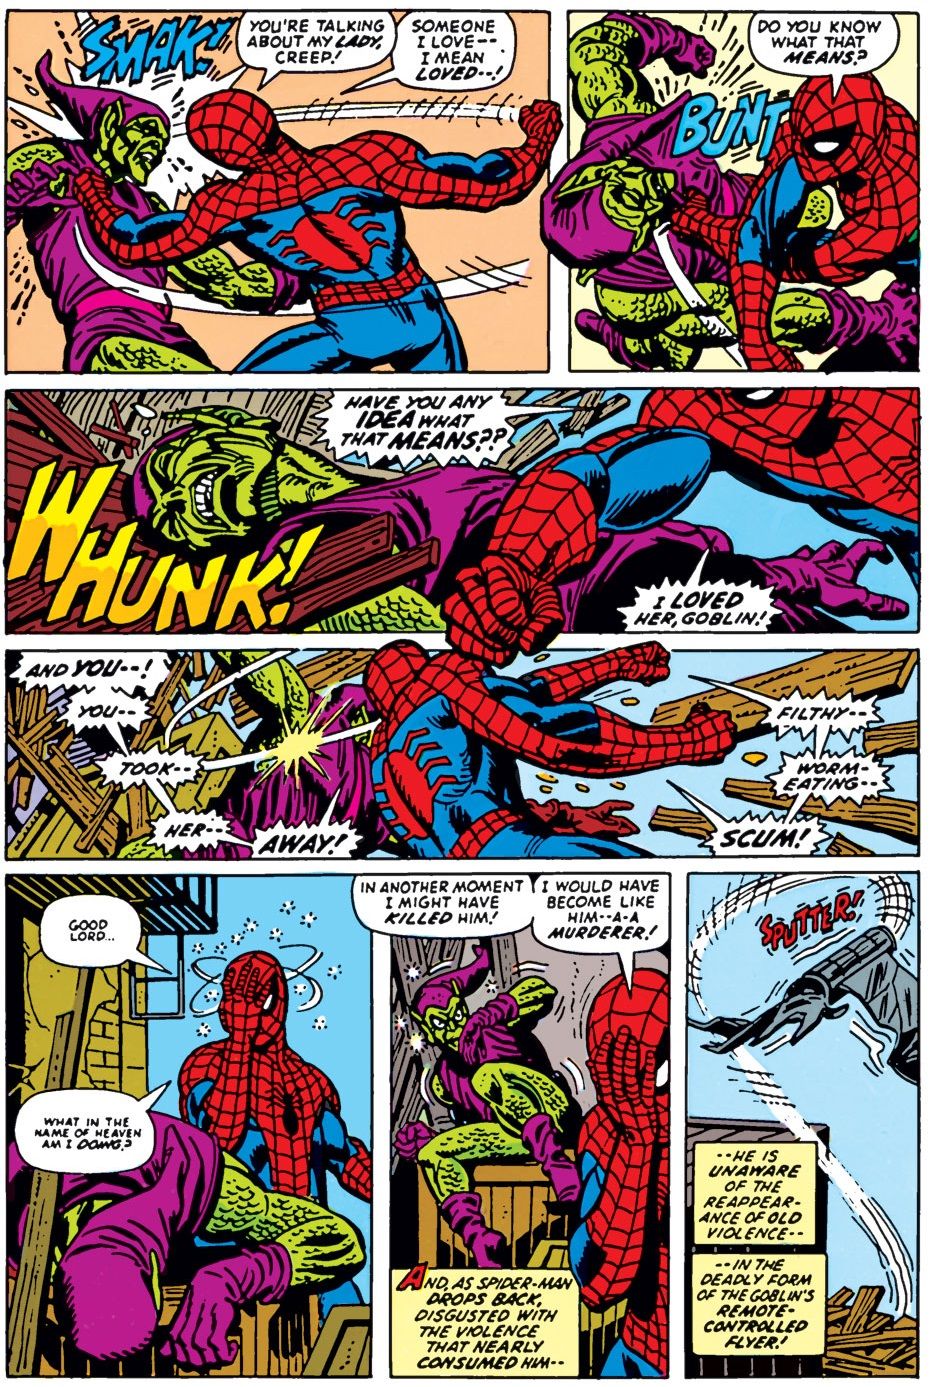 Spider-Man decides NOT to kill Green Goblin